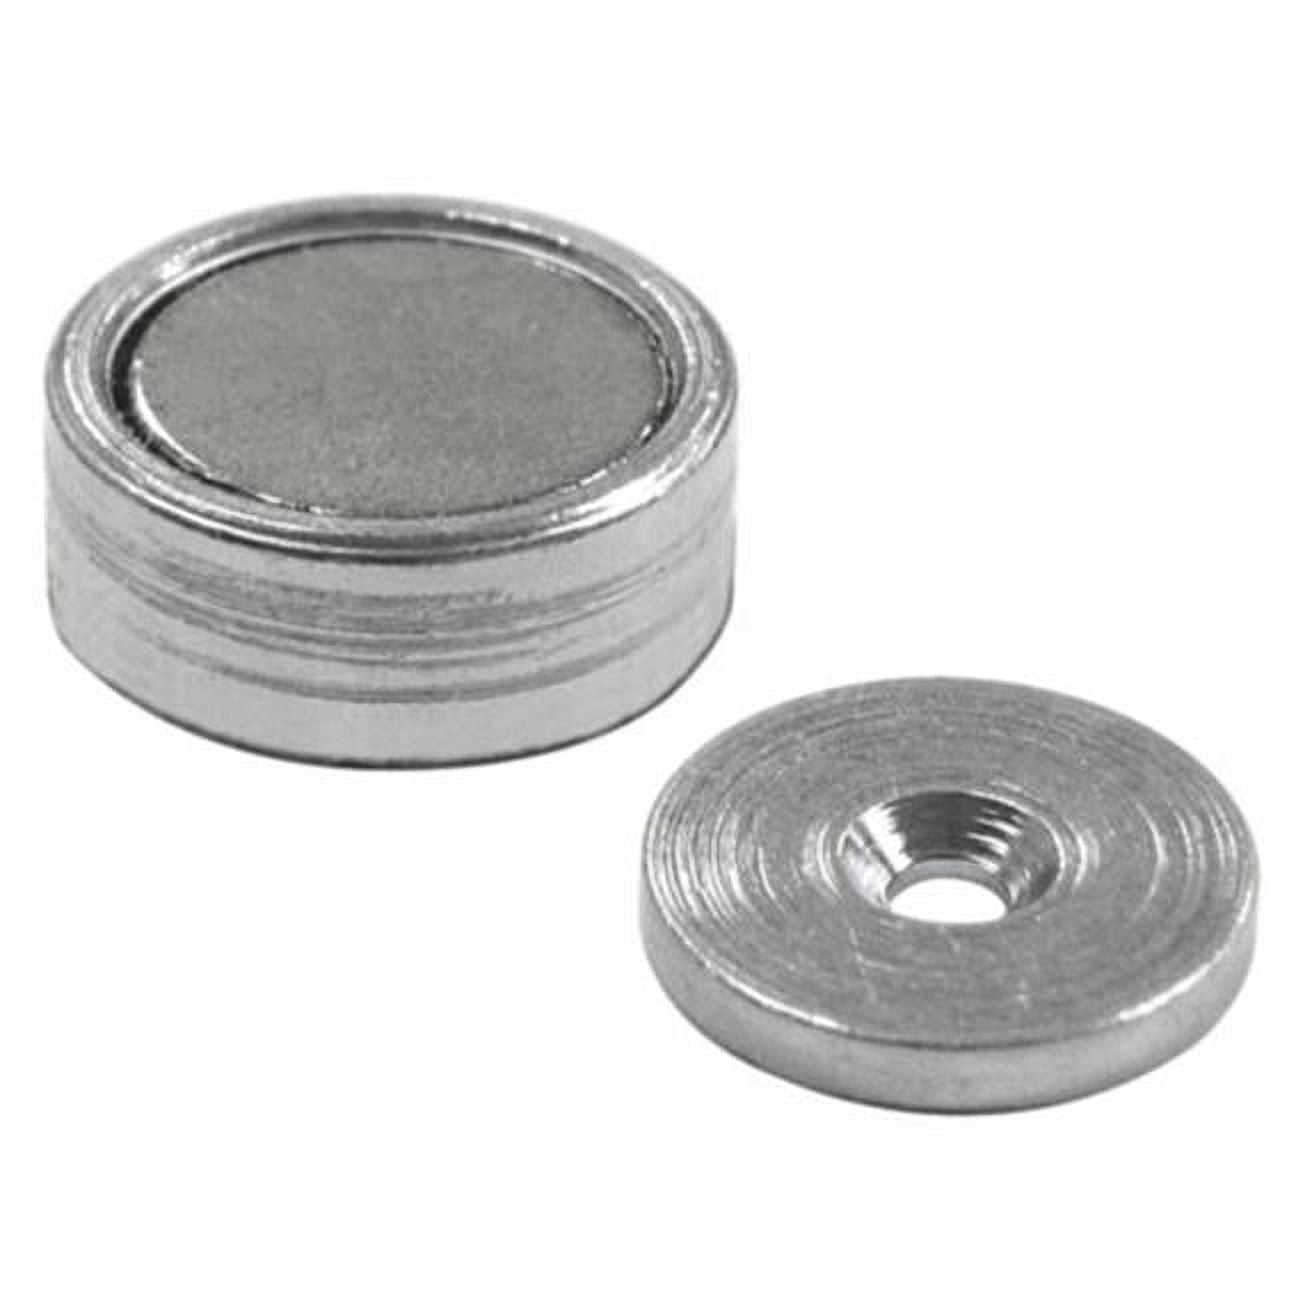 Master Magnetics Neodymium Latch Magnet Kit (1 set)